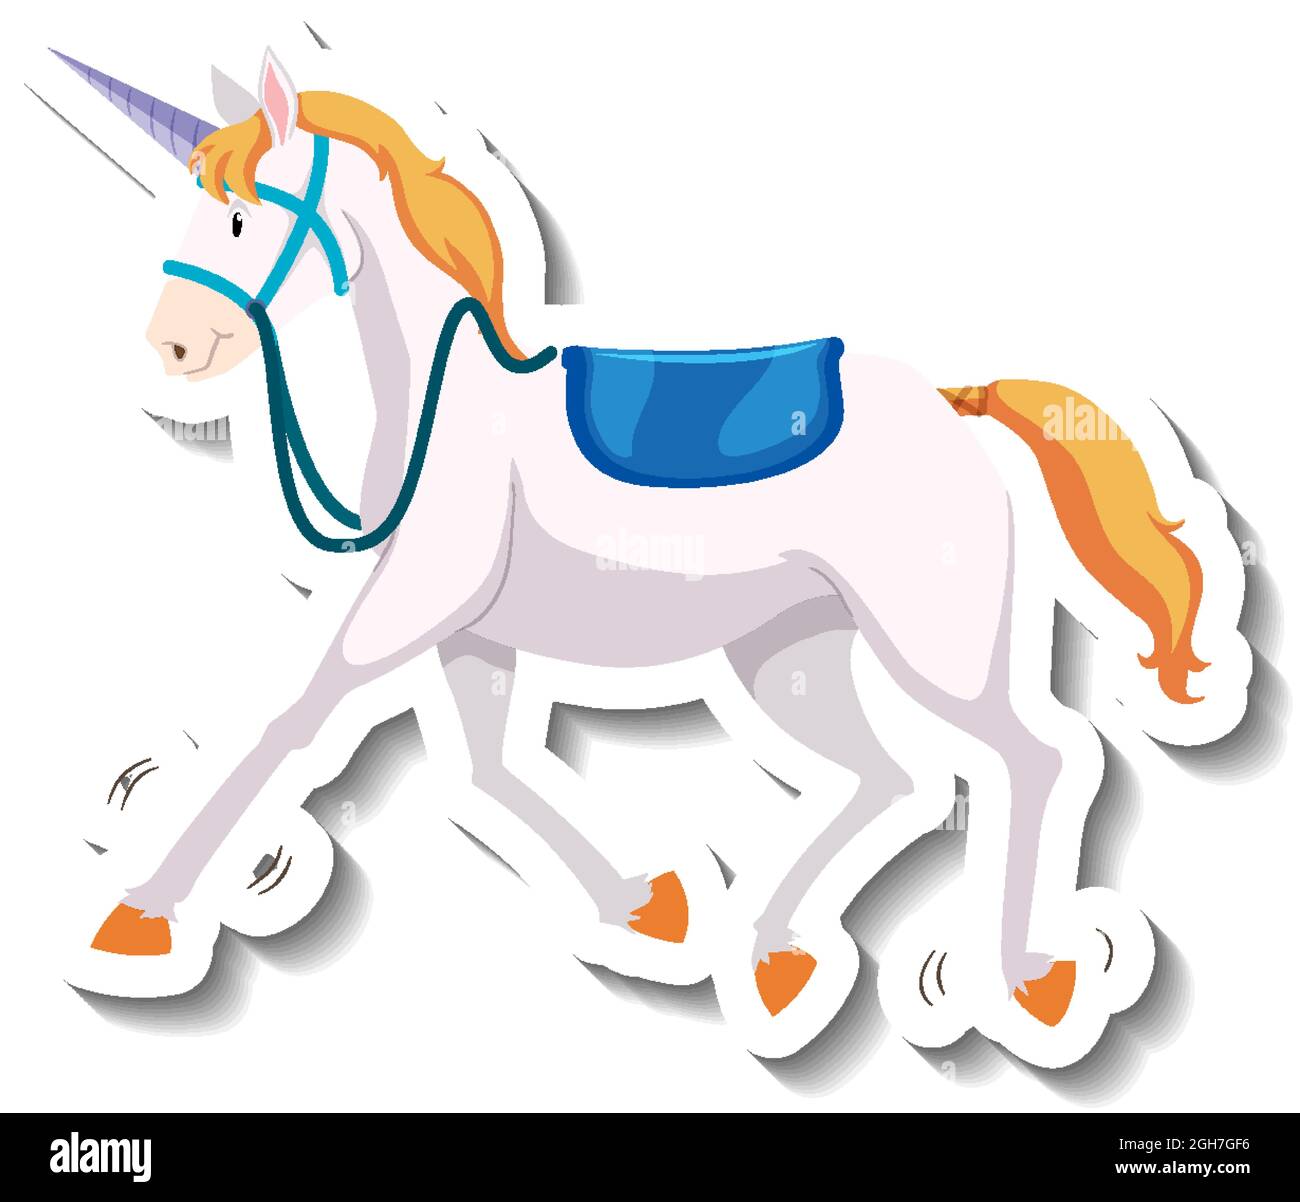 Cute unicorn standing pose on white background illustration Stock Vector